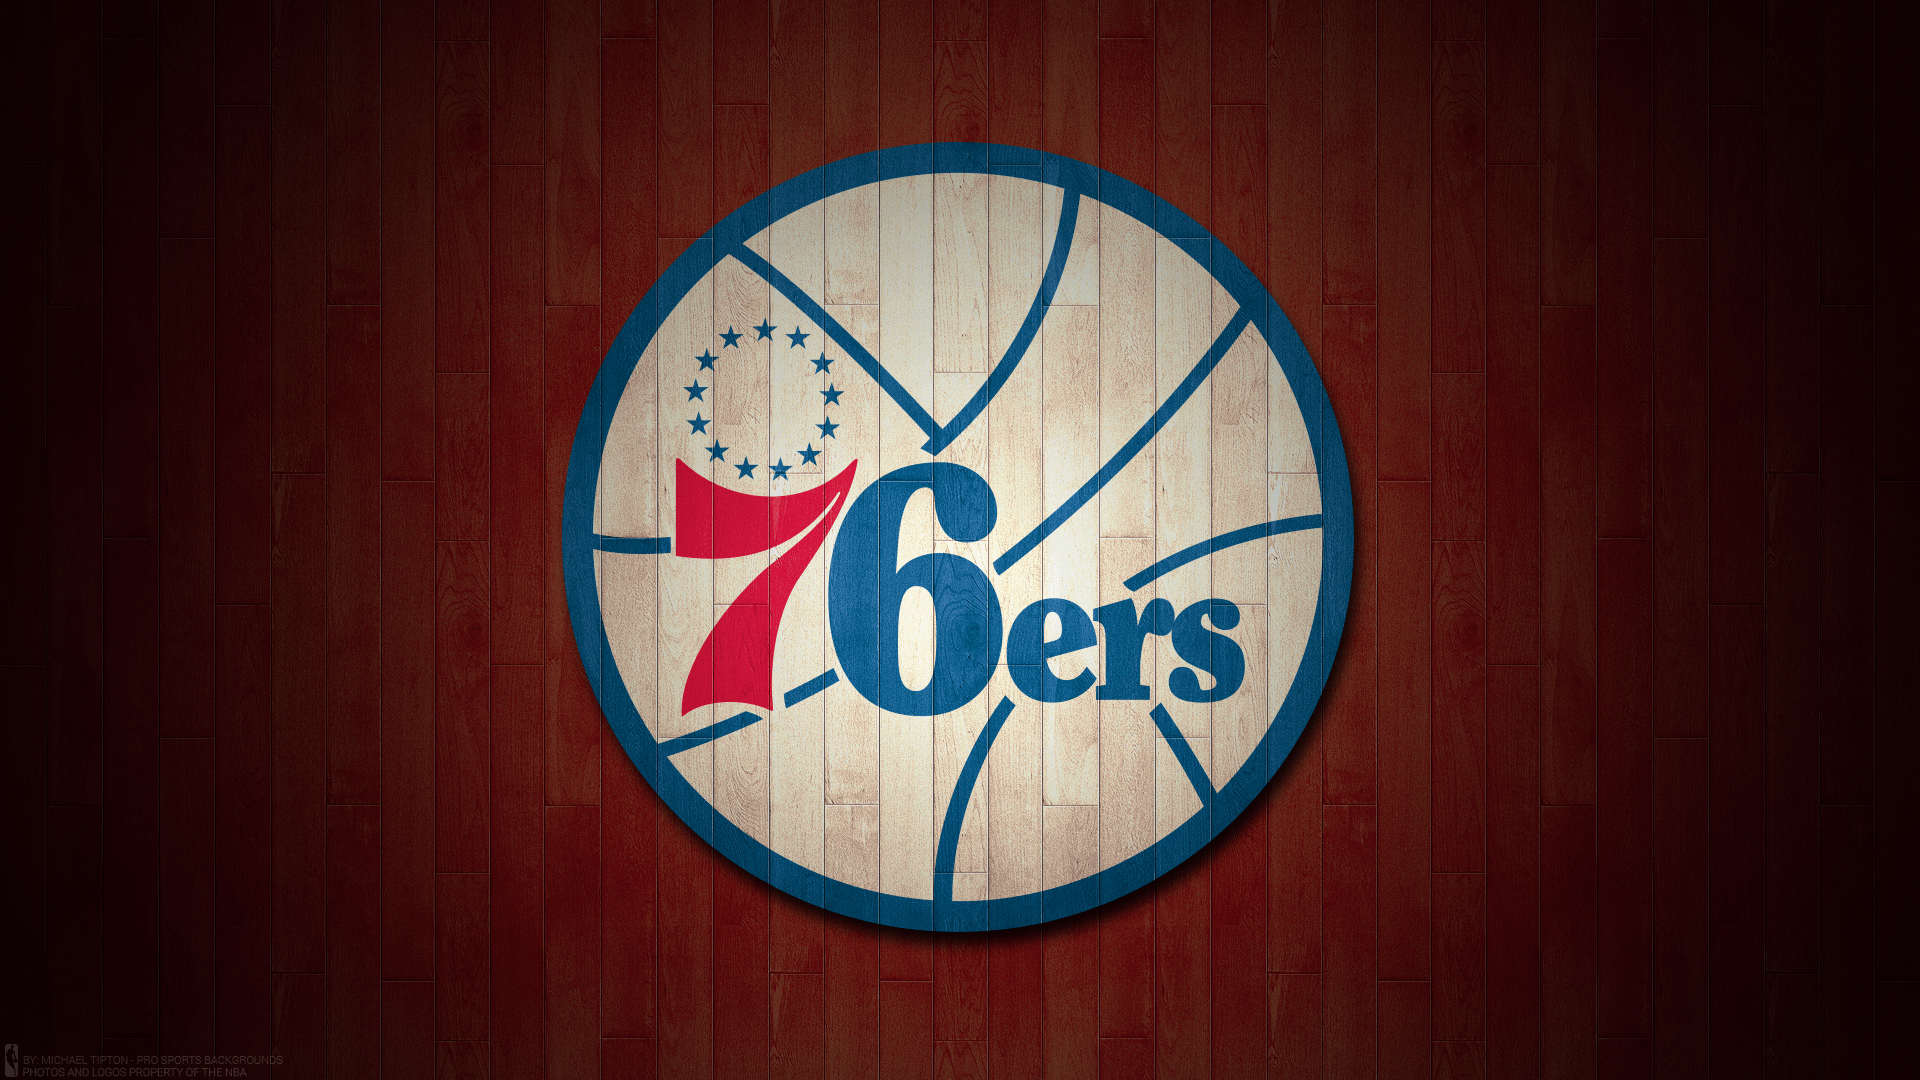 Philadelphia 76ers Wallpaper. iPhone. Android